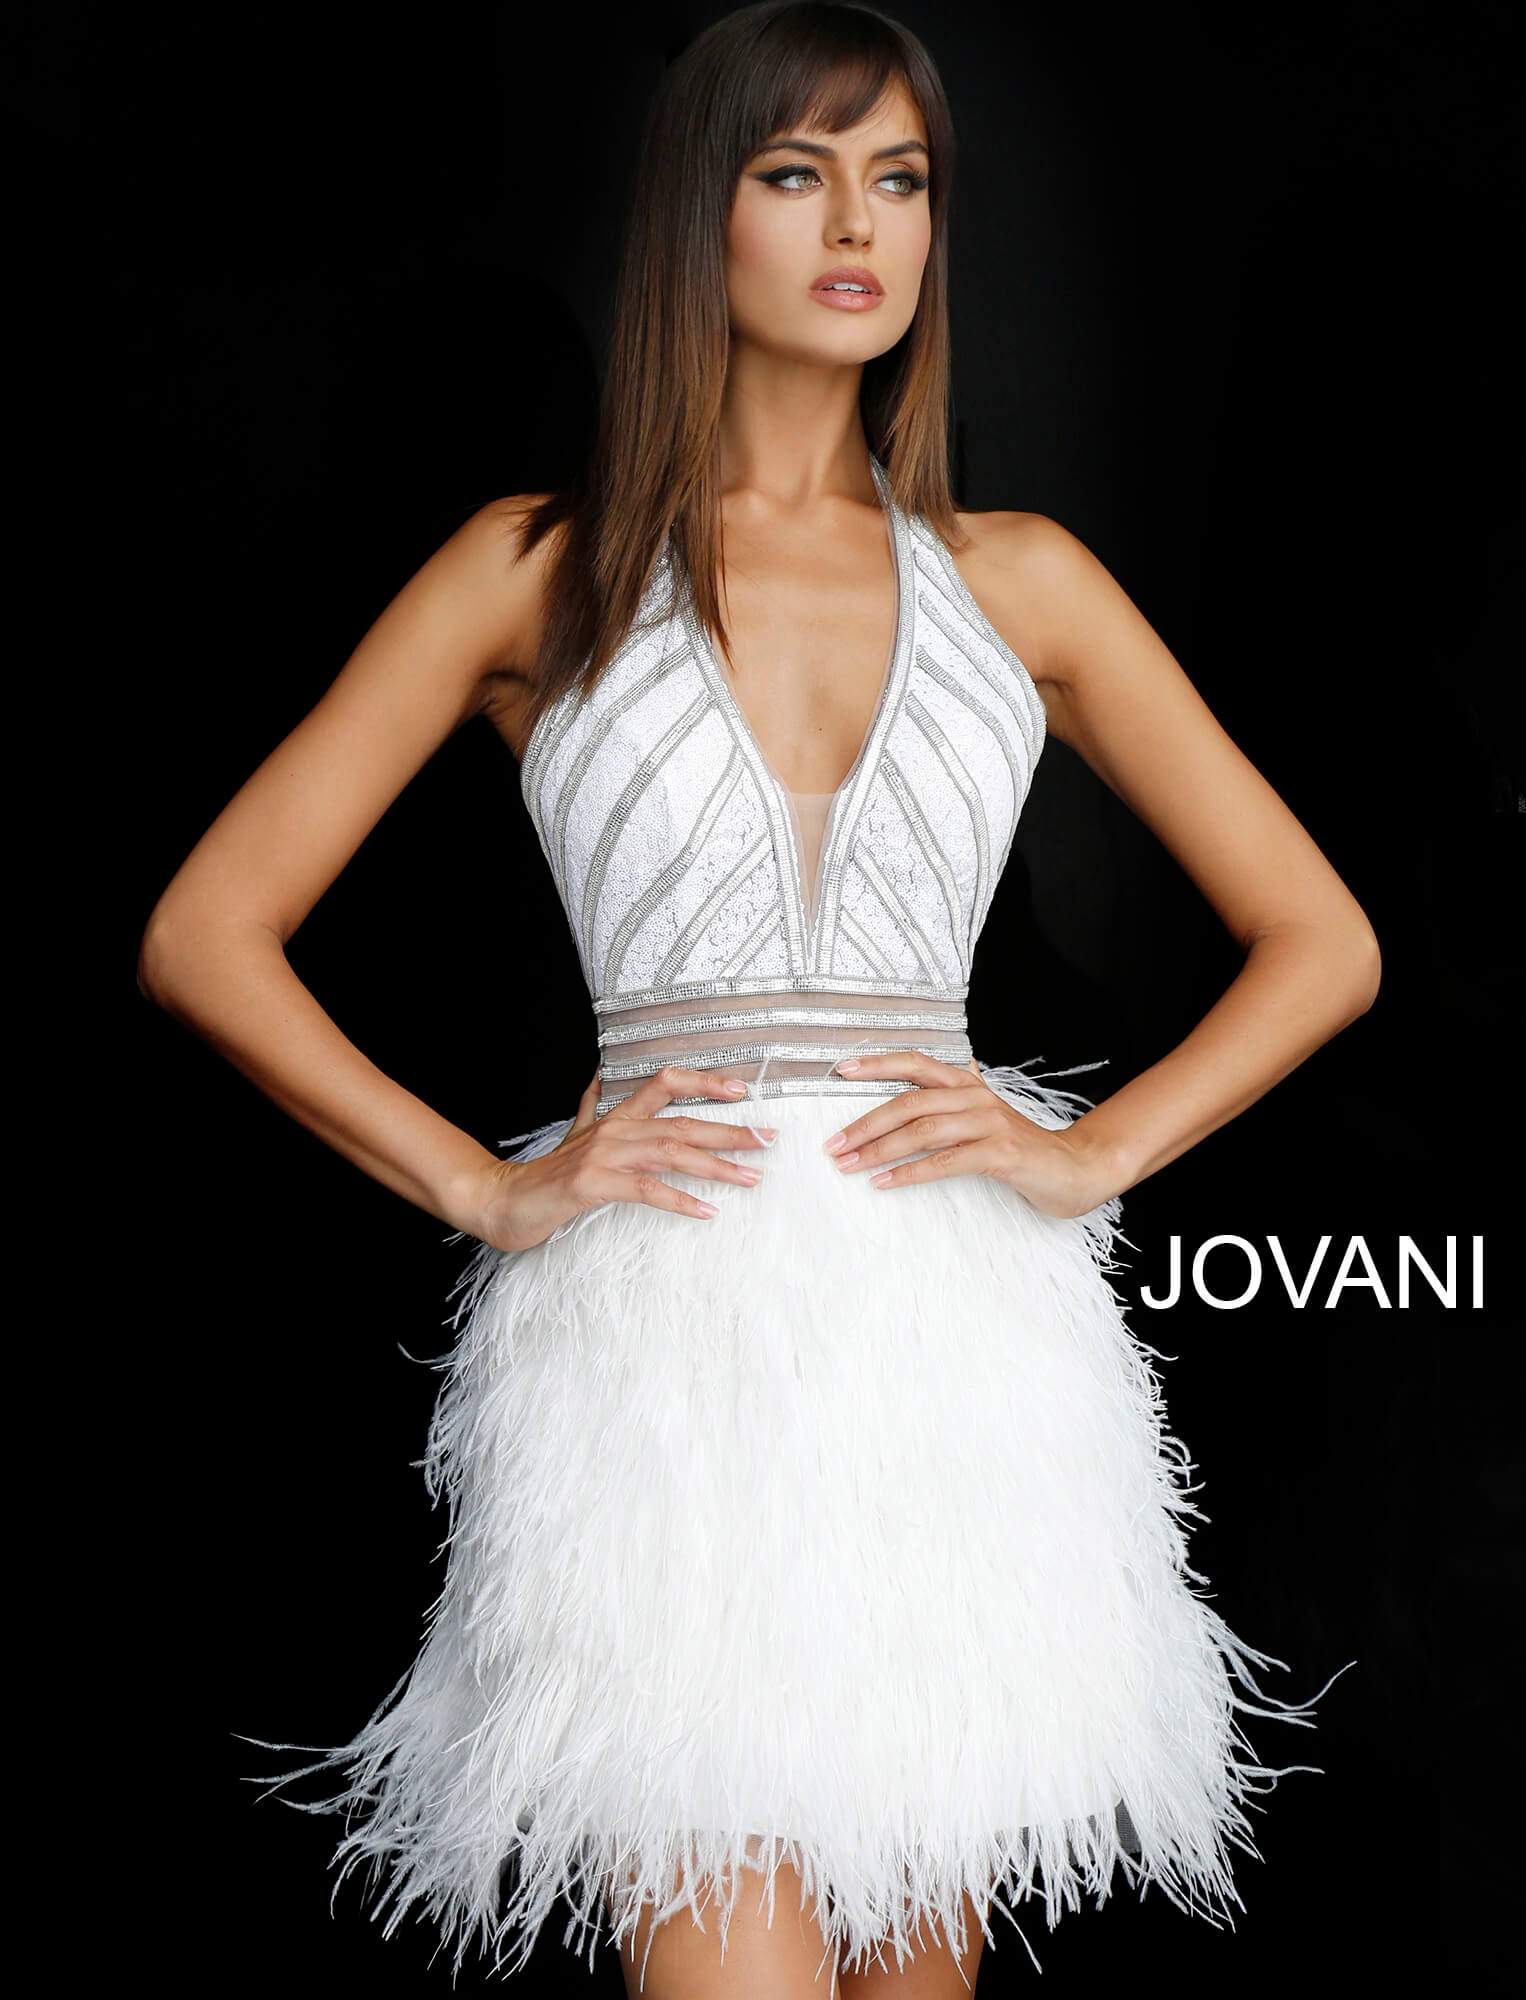 jovani white cocktail dress